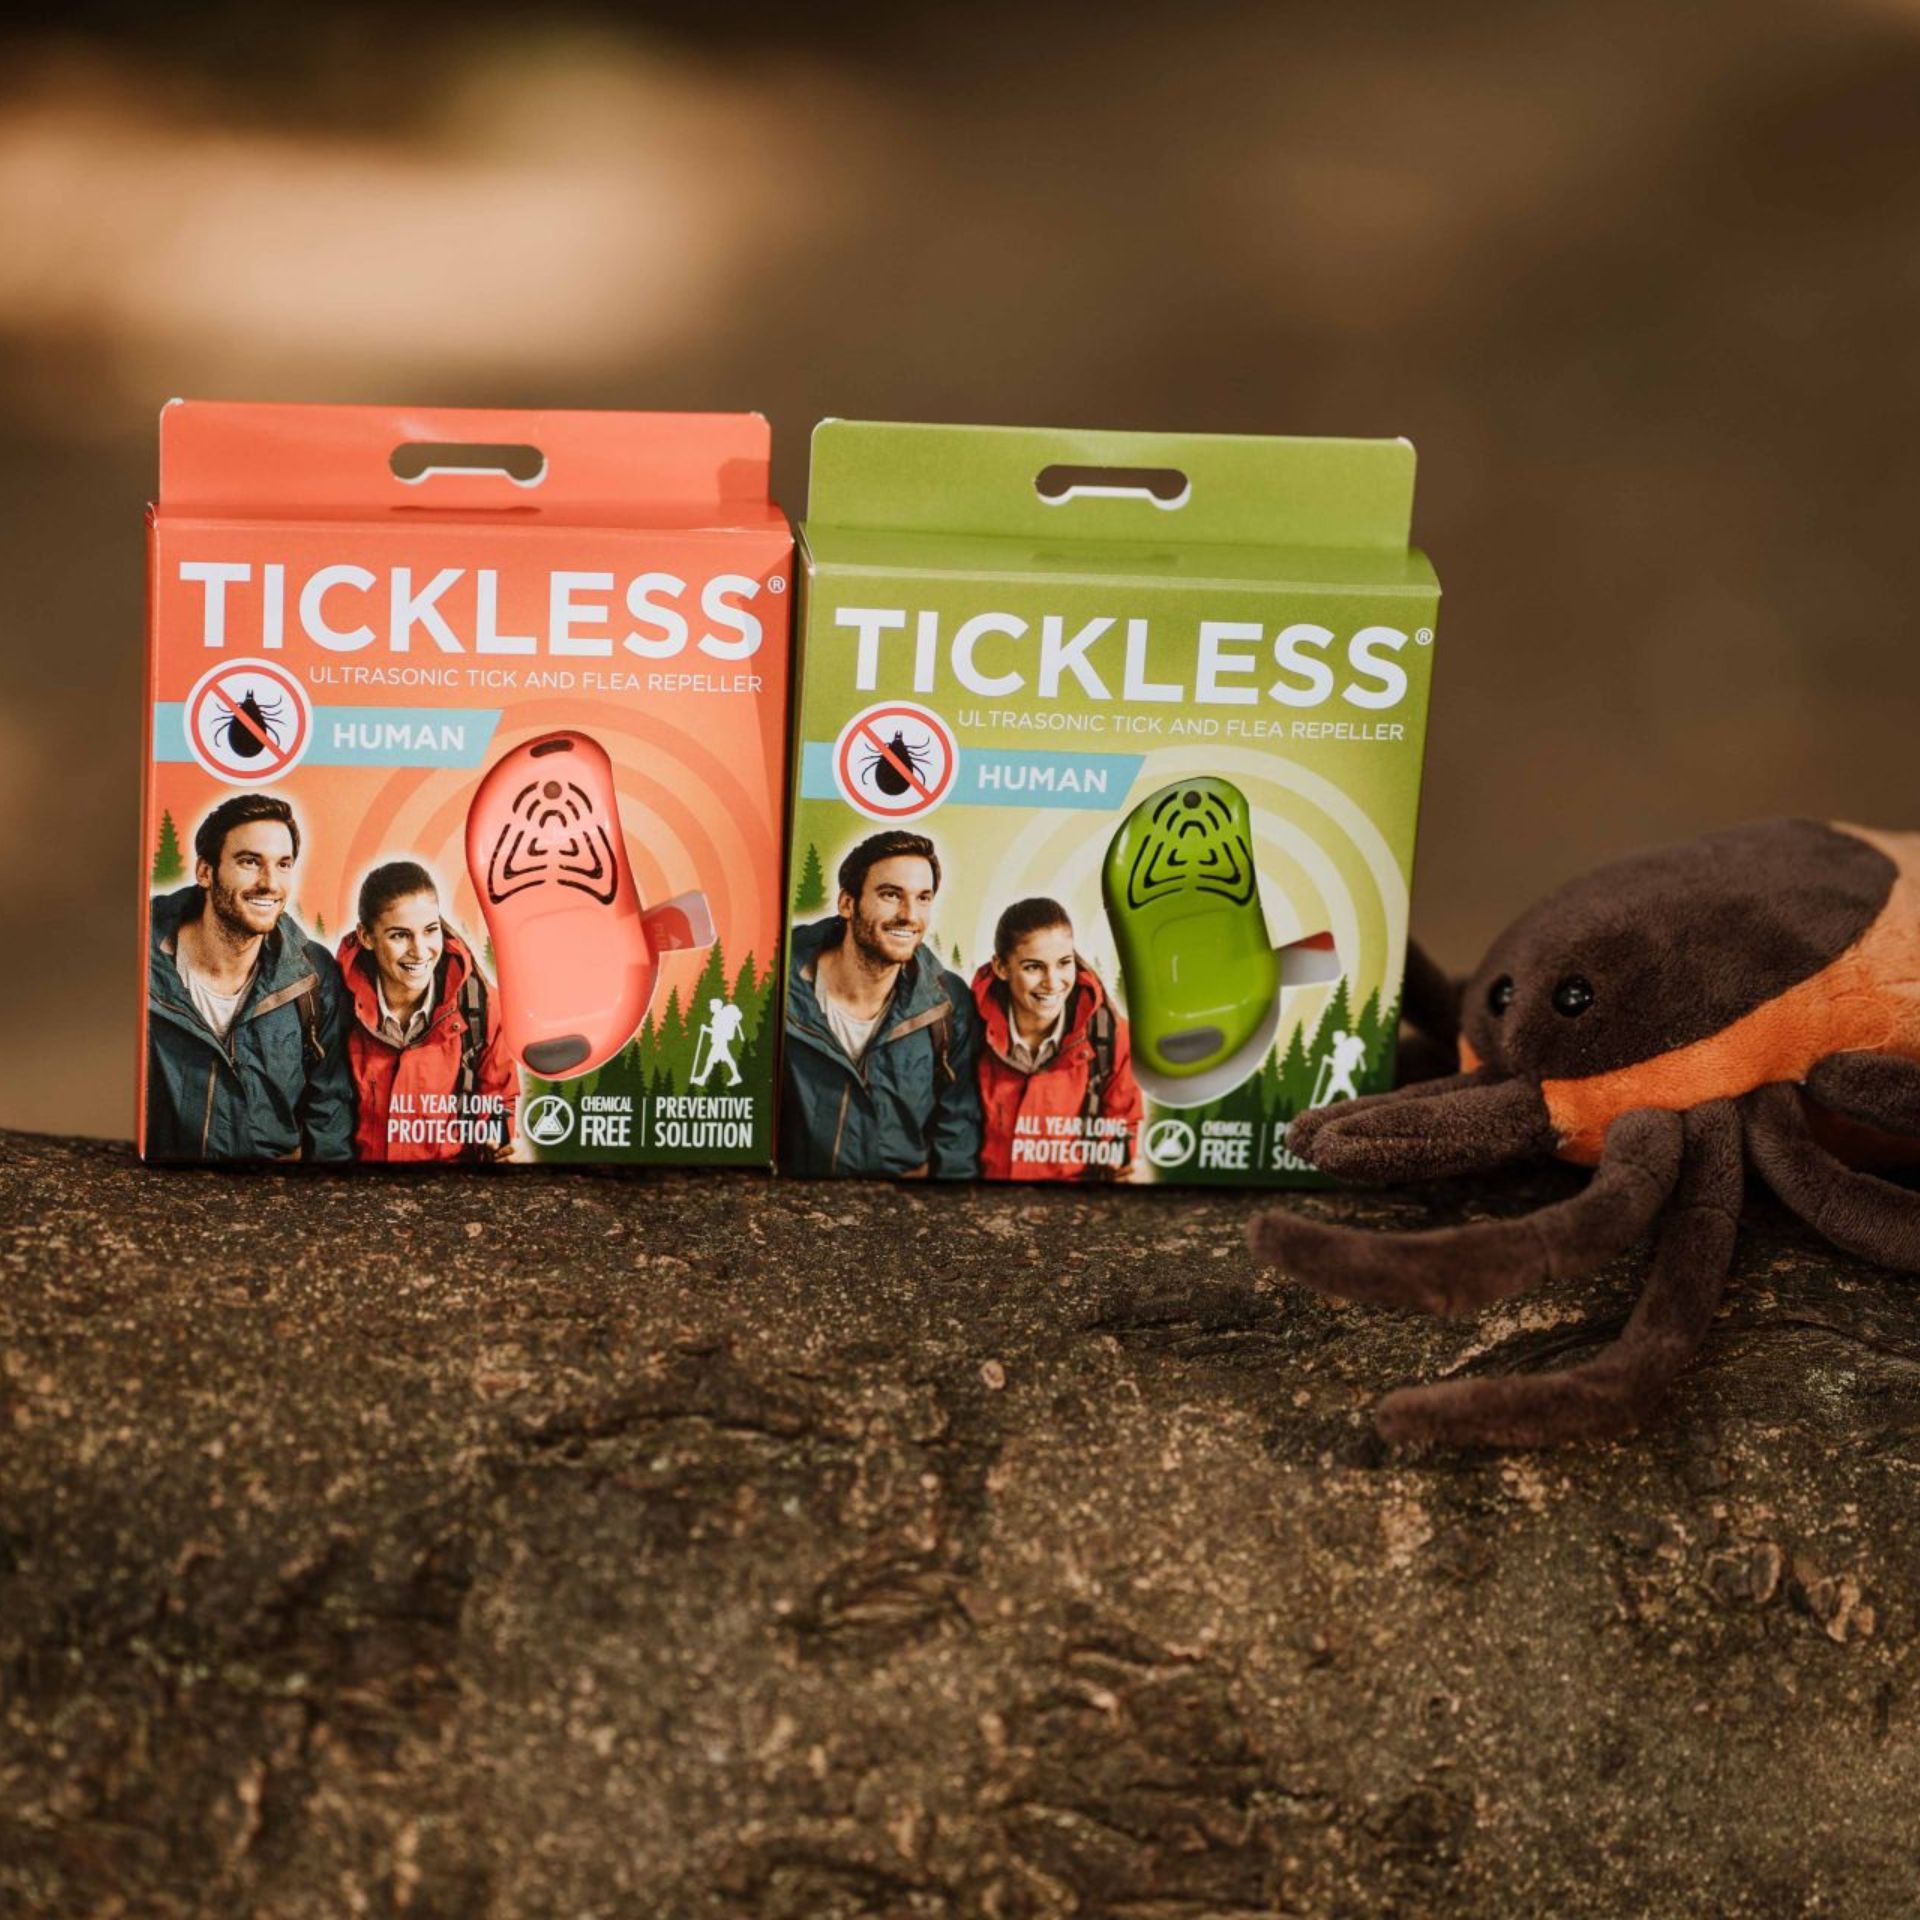 Tickless Human Tick repellent green